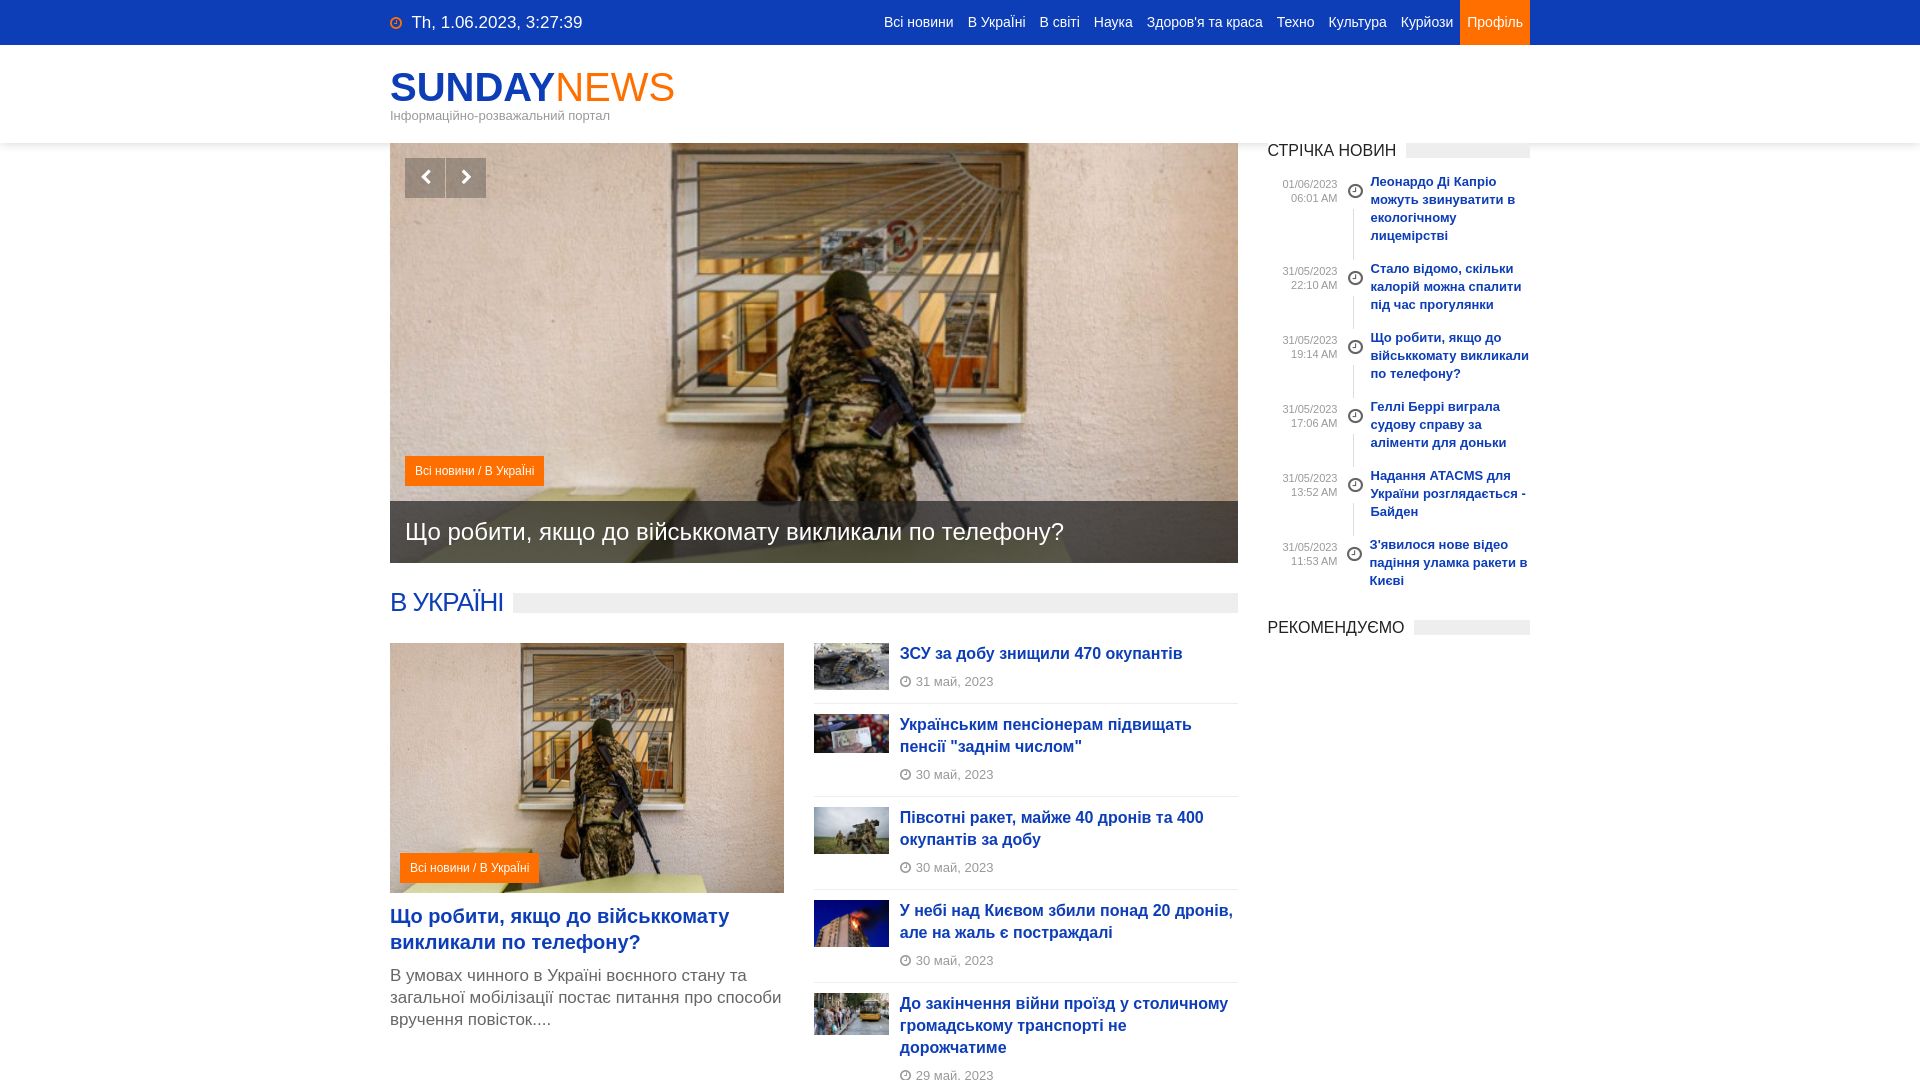 вебсайт sundaynews.info Є   ONLINE